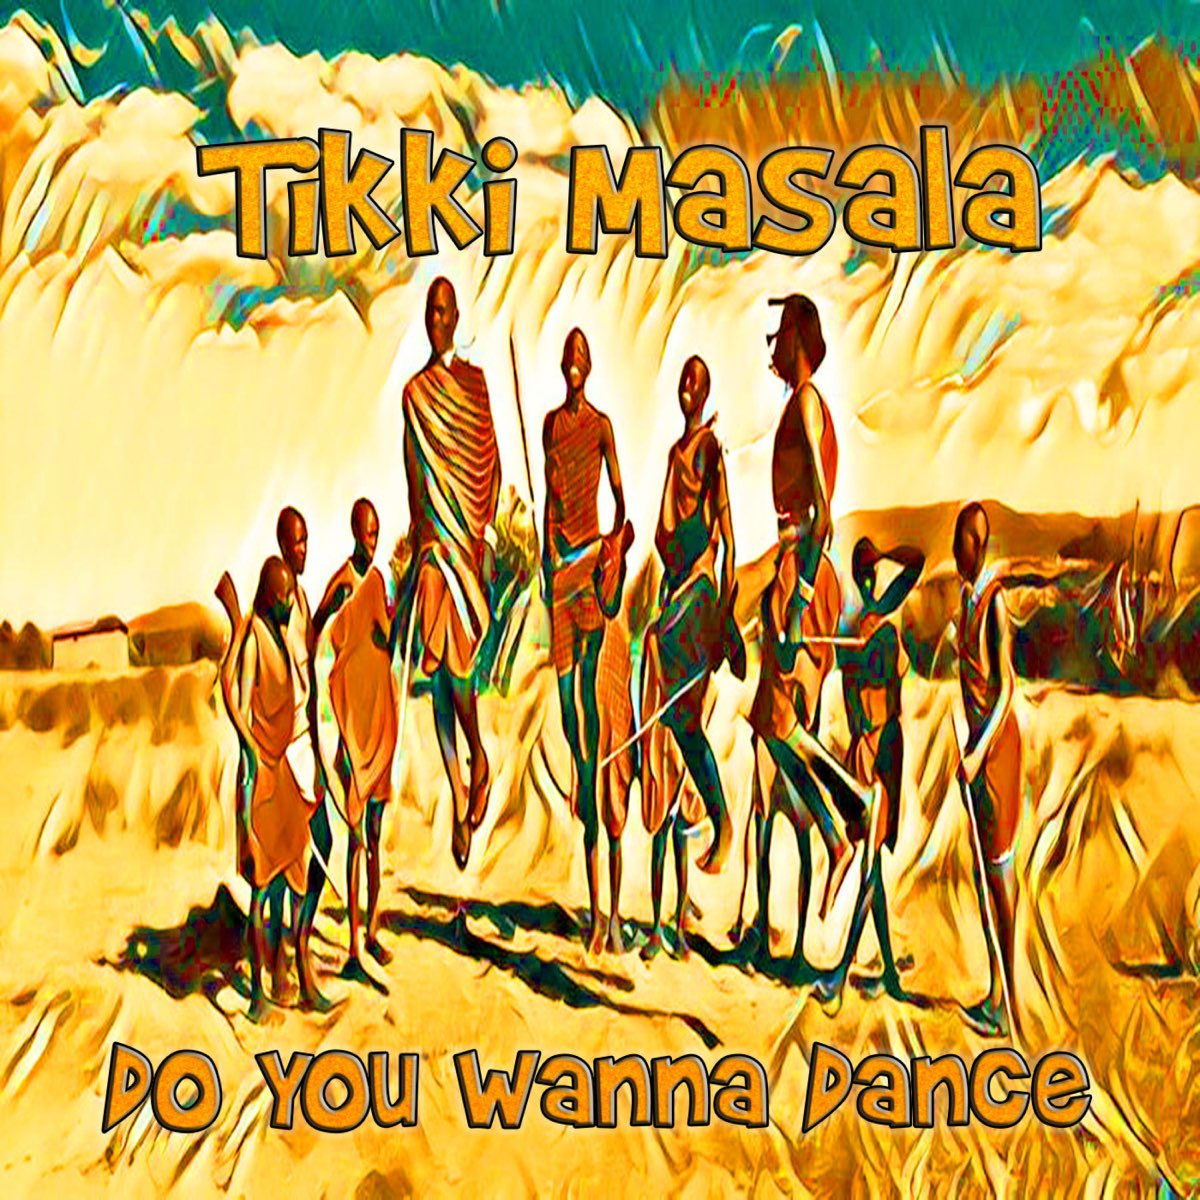 Live with tribe. Ethno Gipsy Tikki Masala. Фото в высоком разрешении. Gipsy Kings. Ethno Hits. Music album Ethno*.